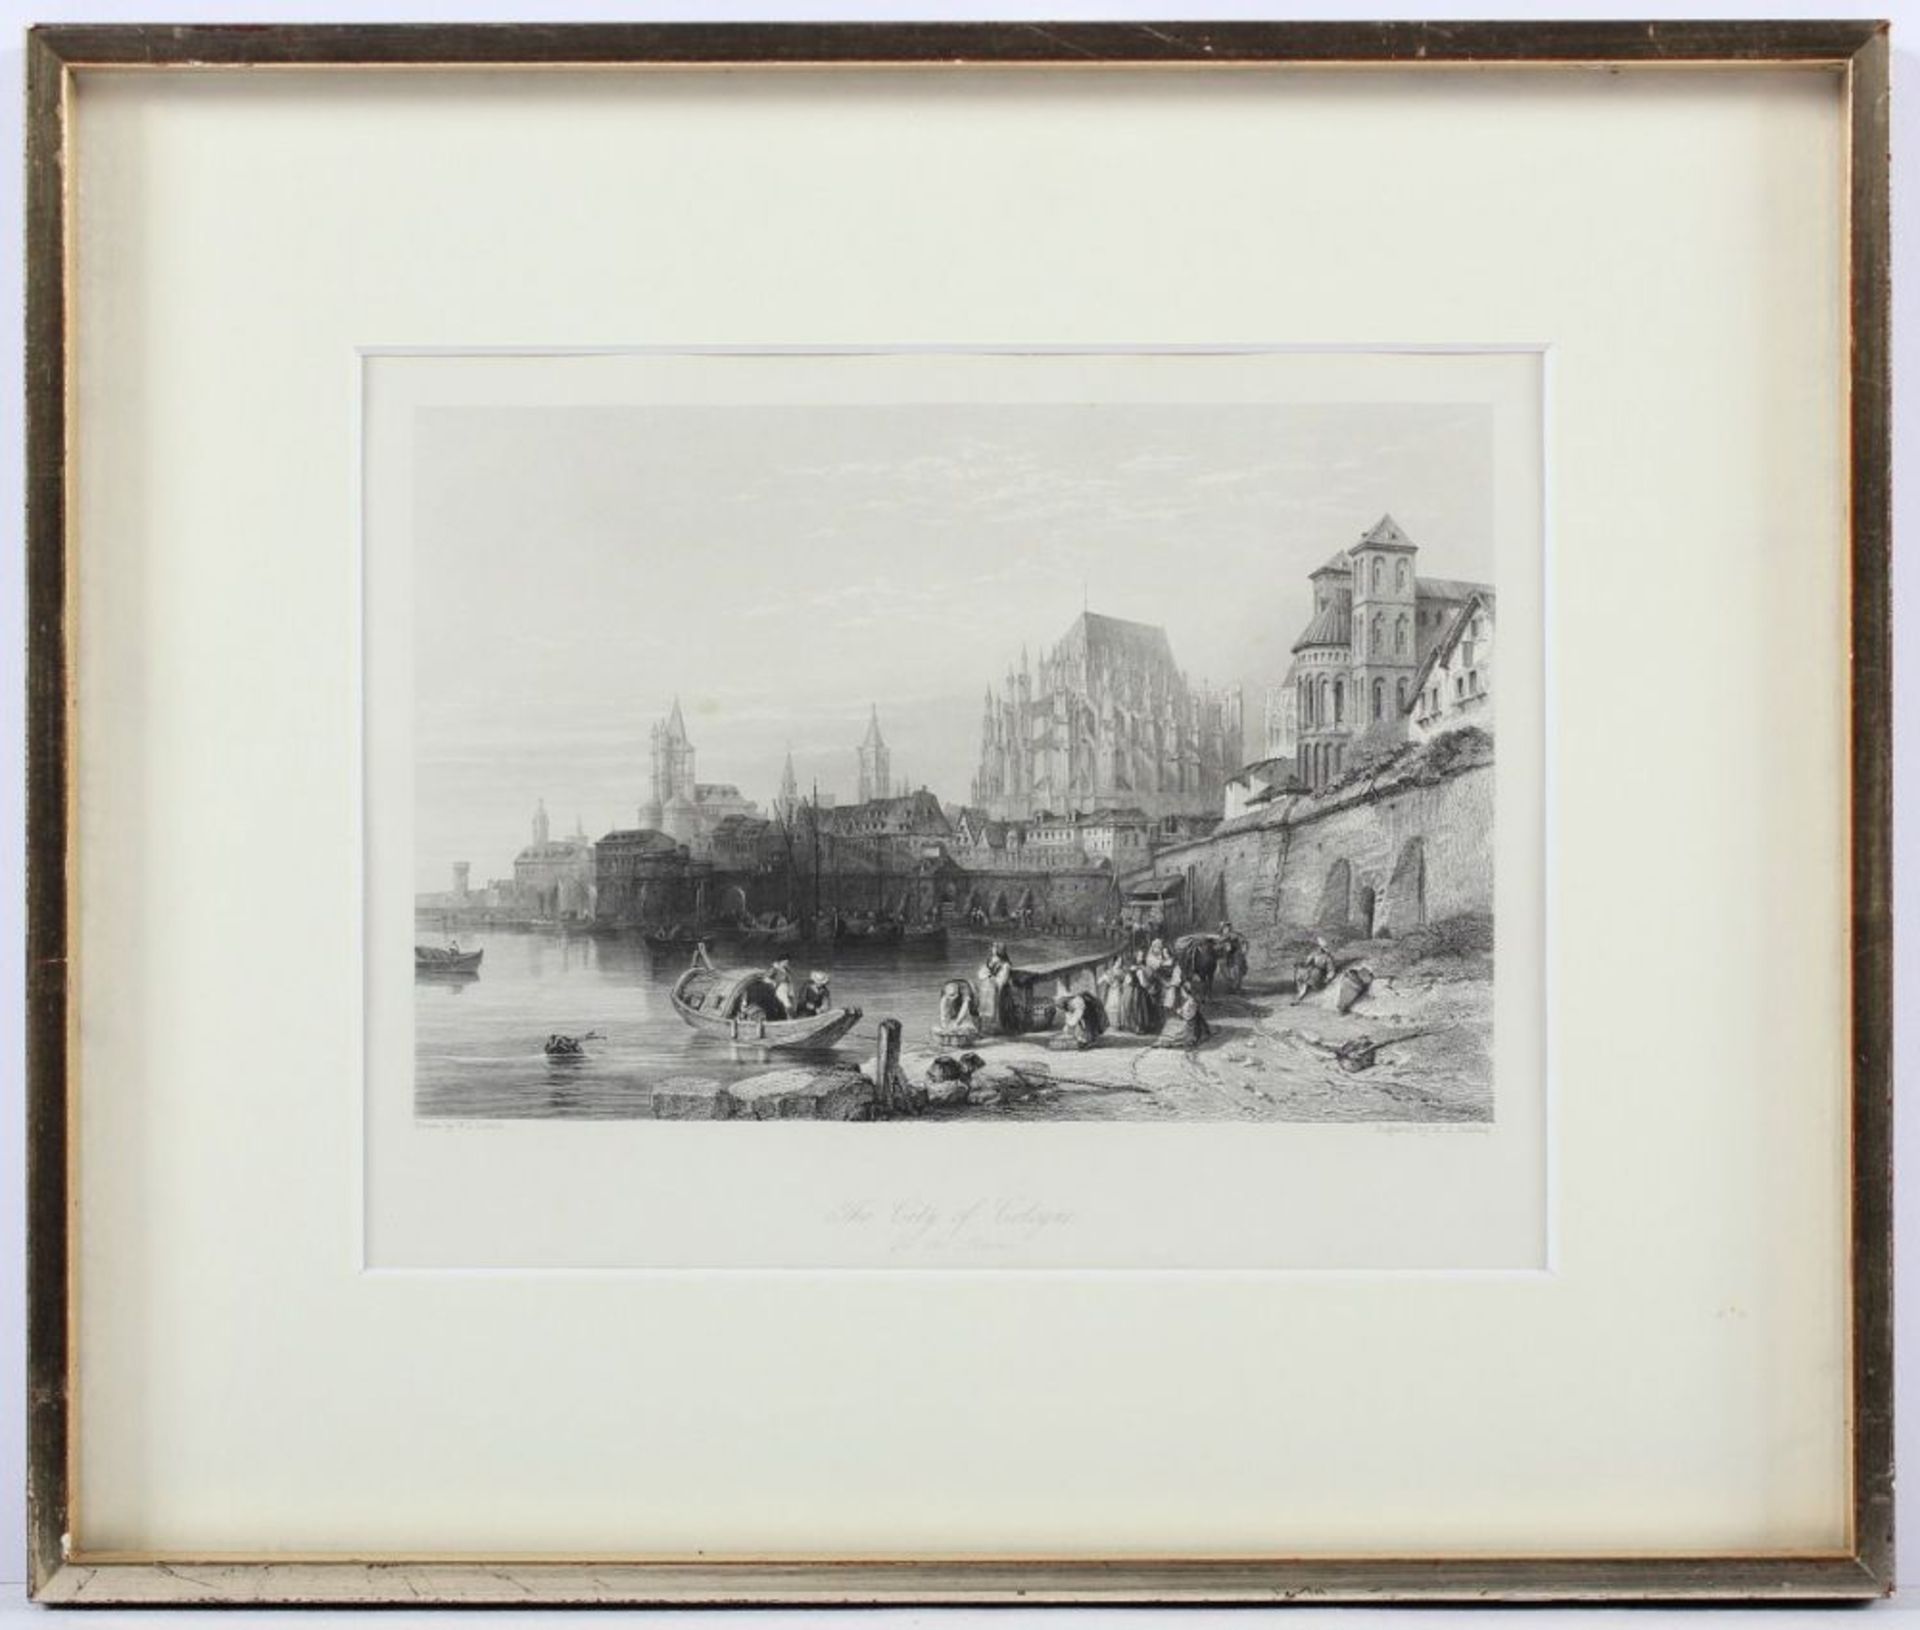 KÖLN, "The City of Cologne", Stahlstich, 13 x 19, von Starling nach Leitch, 1841, Boisserée- - Image 2 of 2